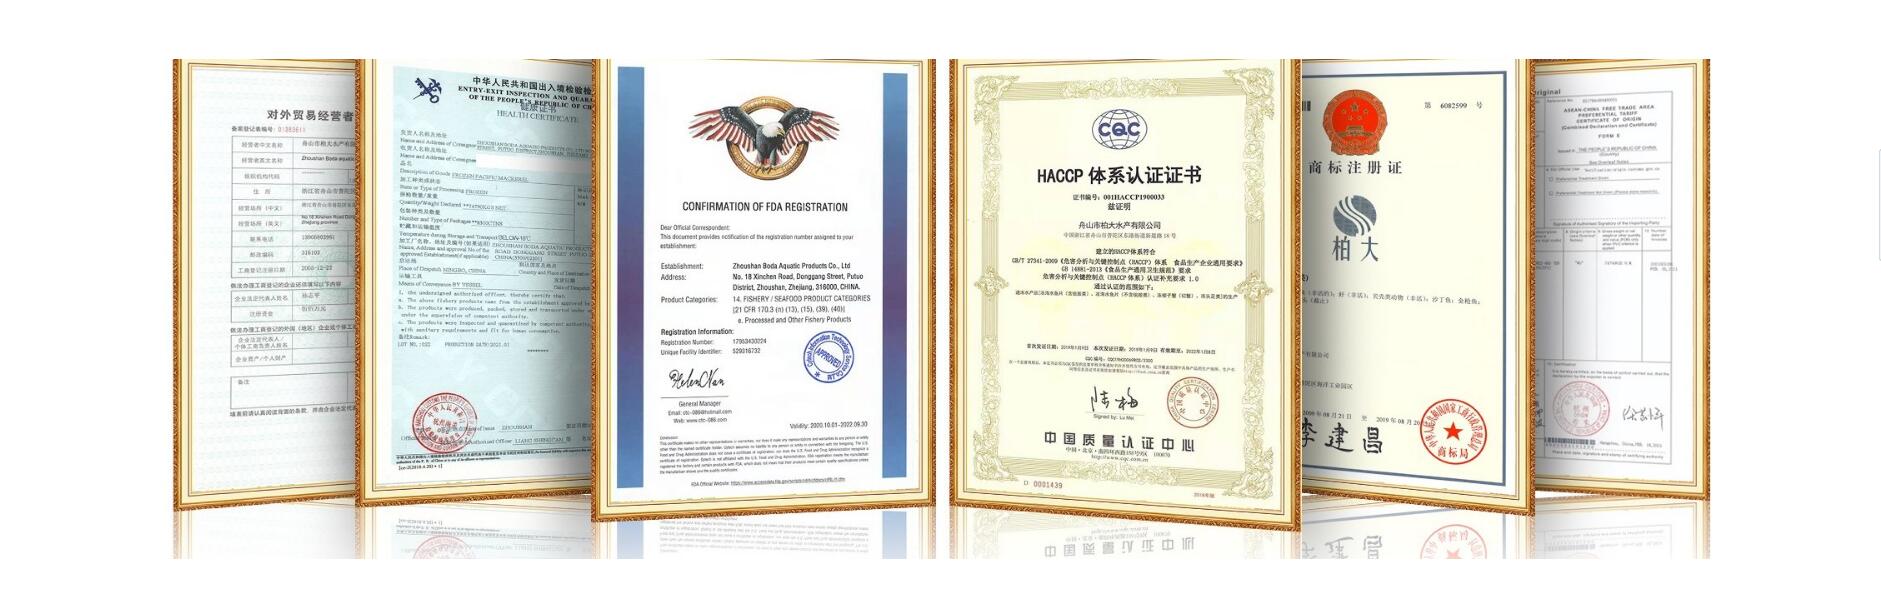 Zhoushan Boda Aquatic Products Co.,Ltd